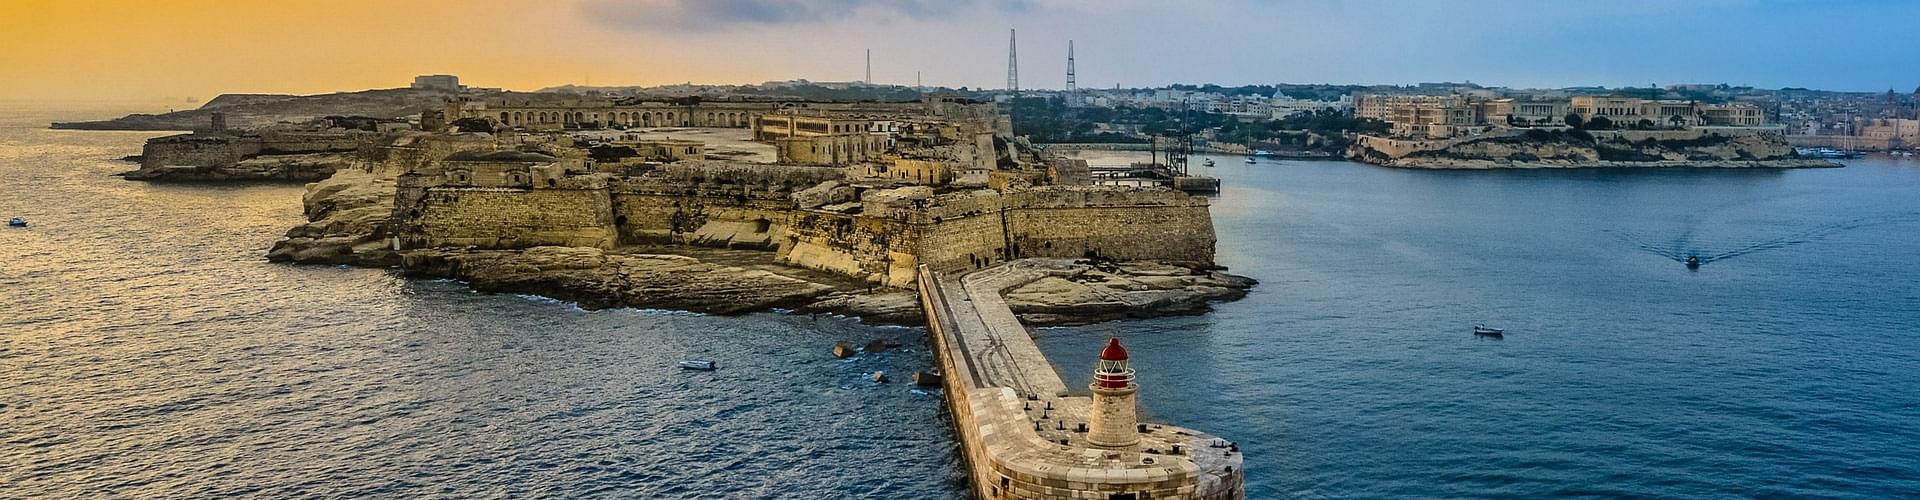 Vacation Ideas For Elderly Parents in Malta